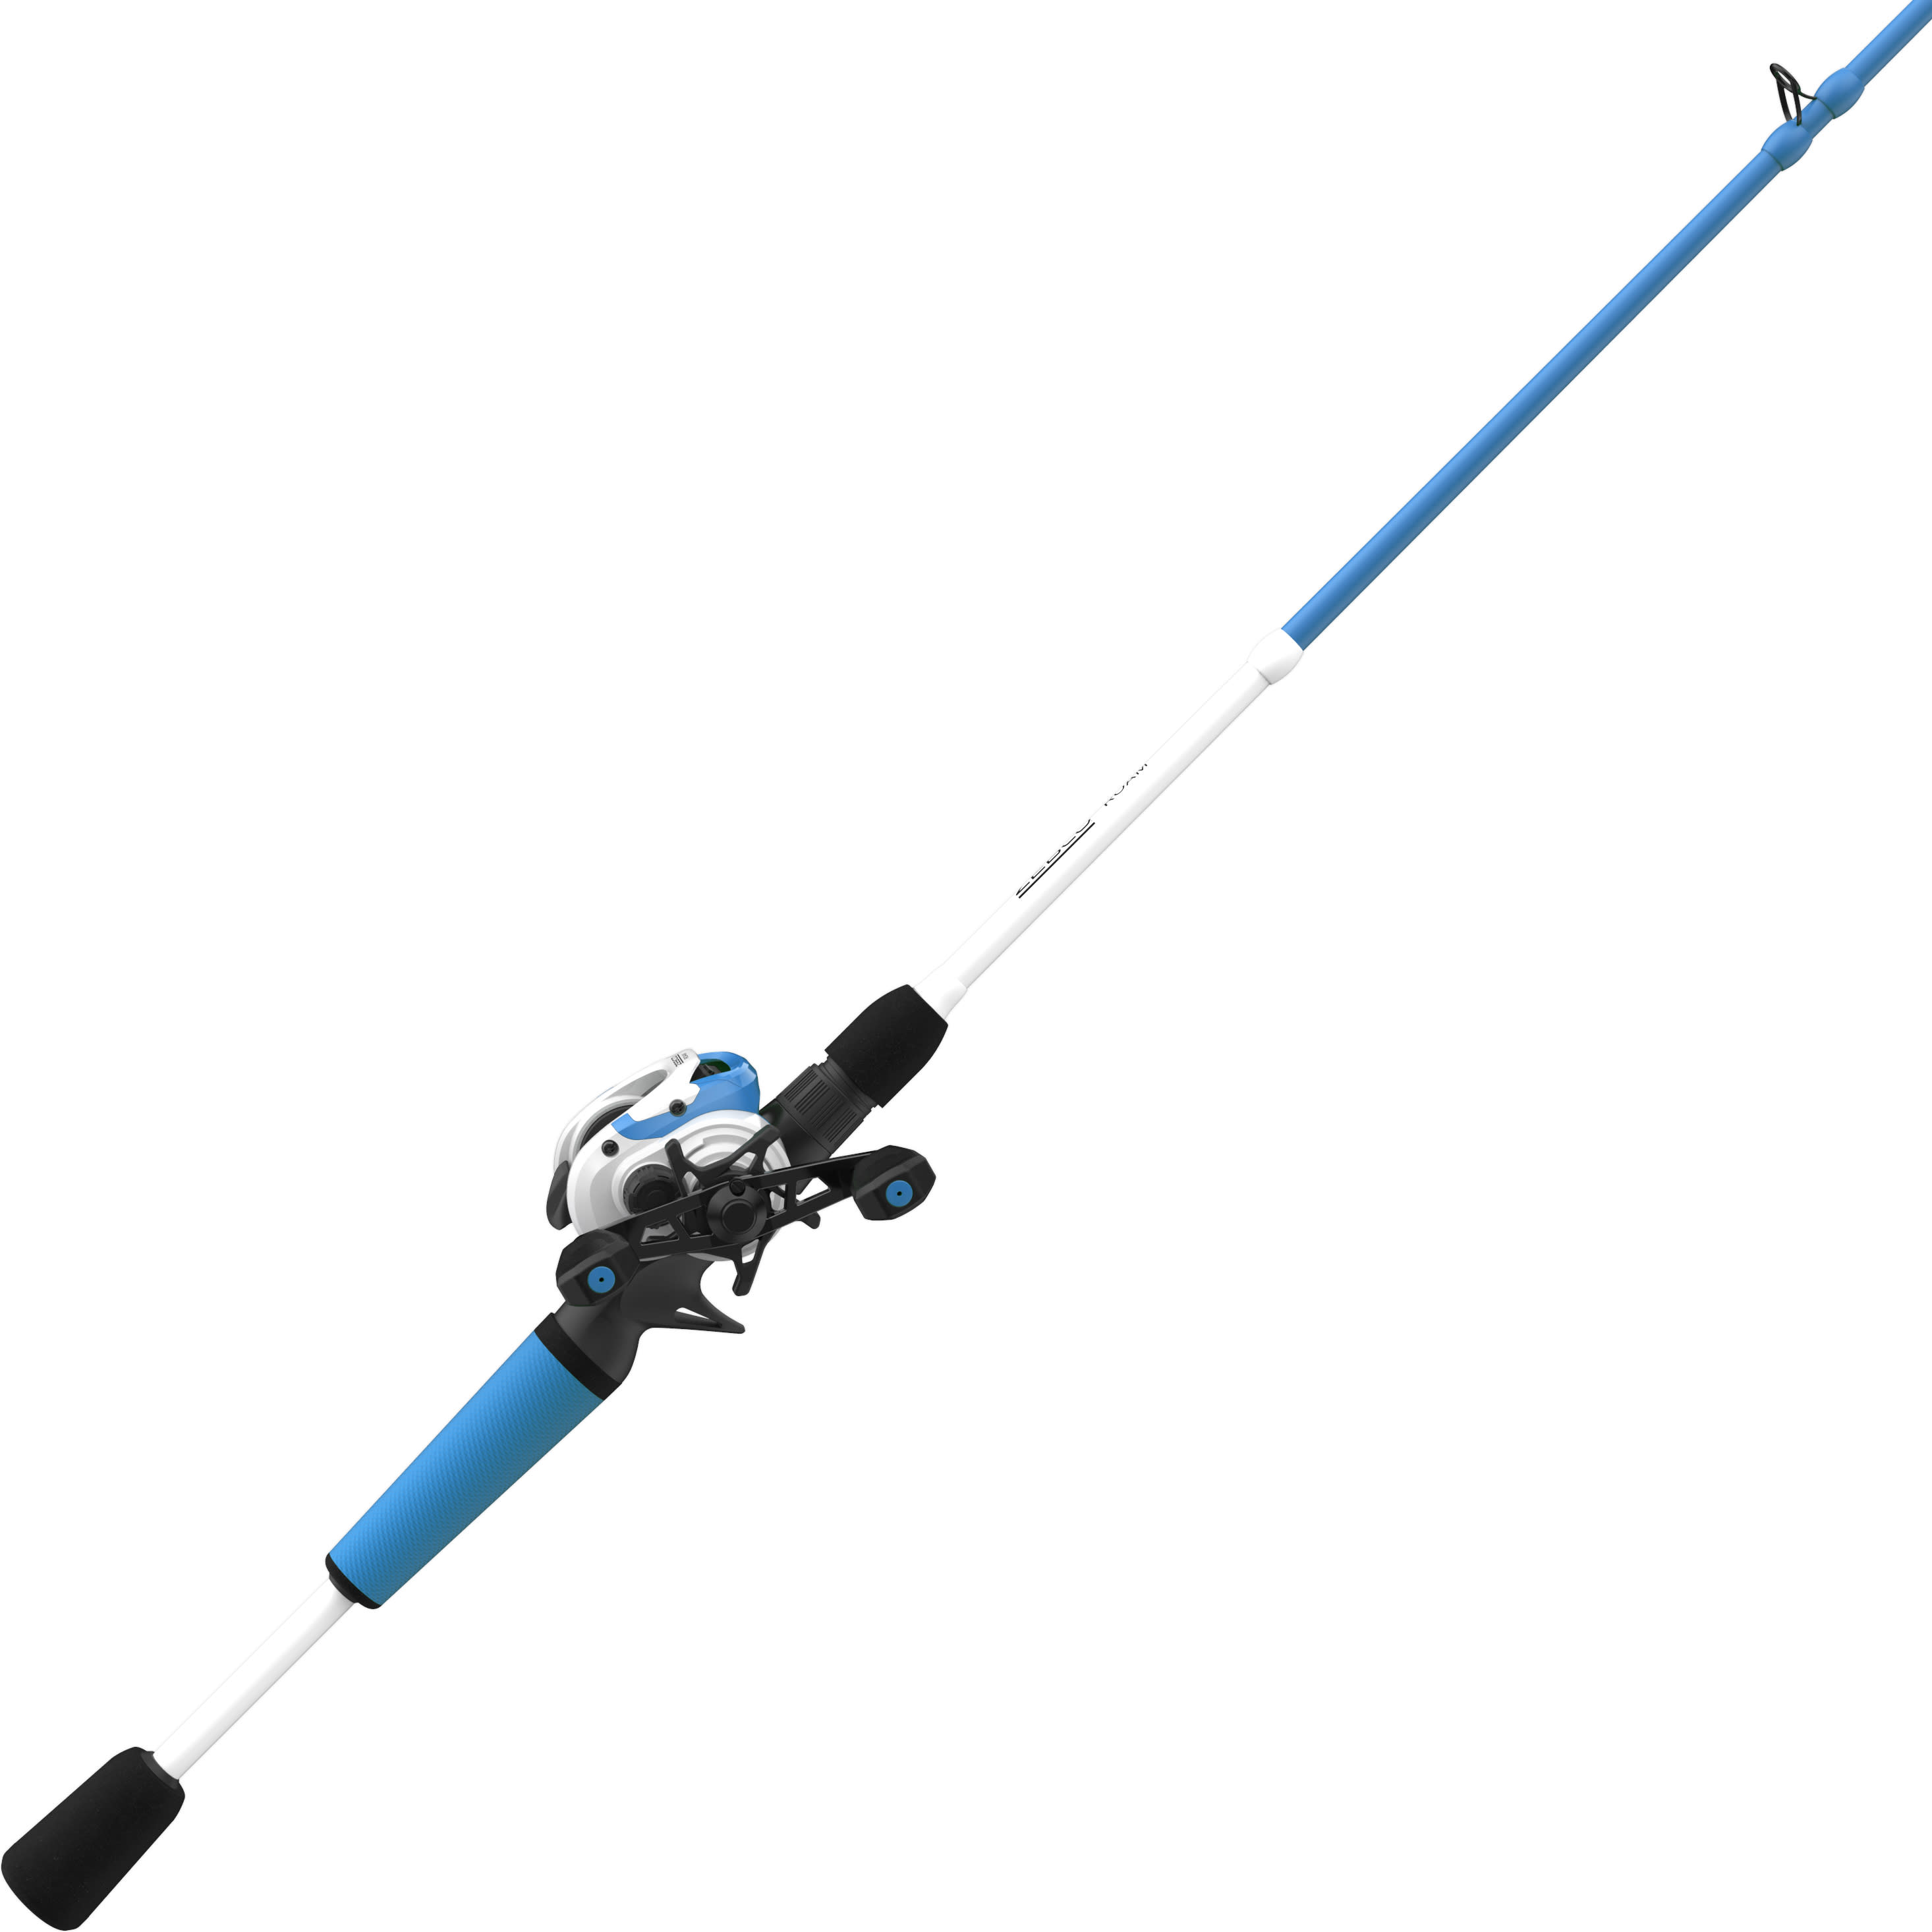 Abu Garcia Blue Max Low Profile Baitcast Reel and Fishing Rod Combo